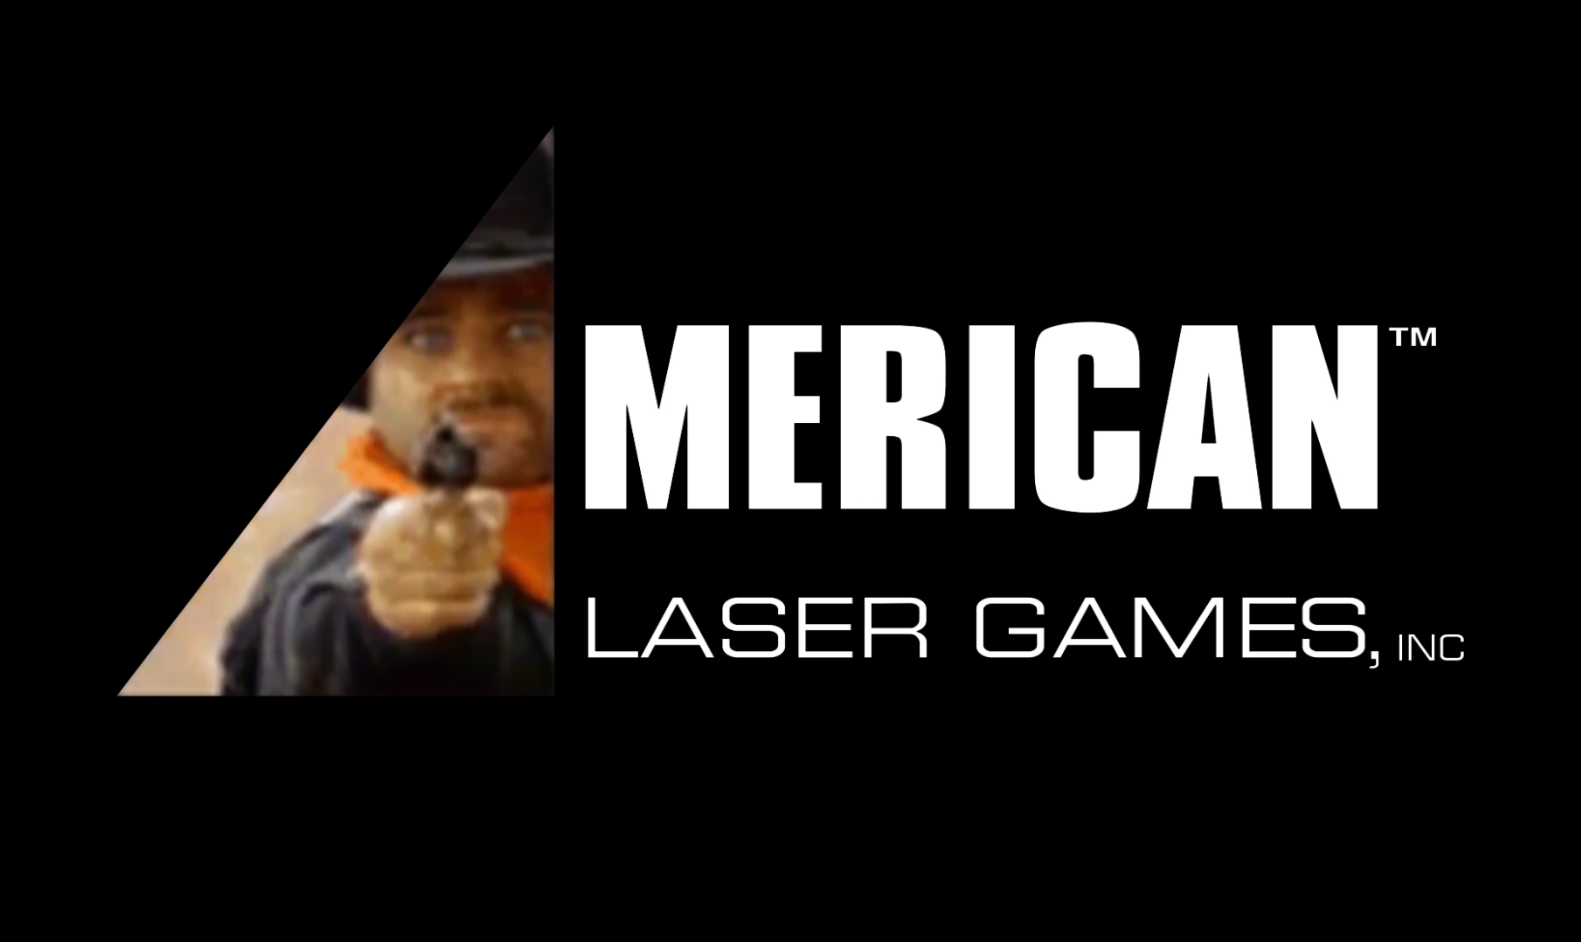 More information about "American Laser Games Platform Video"